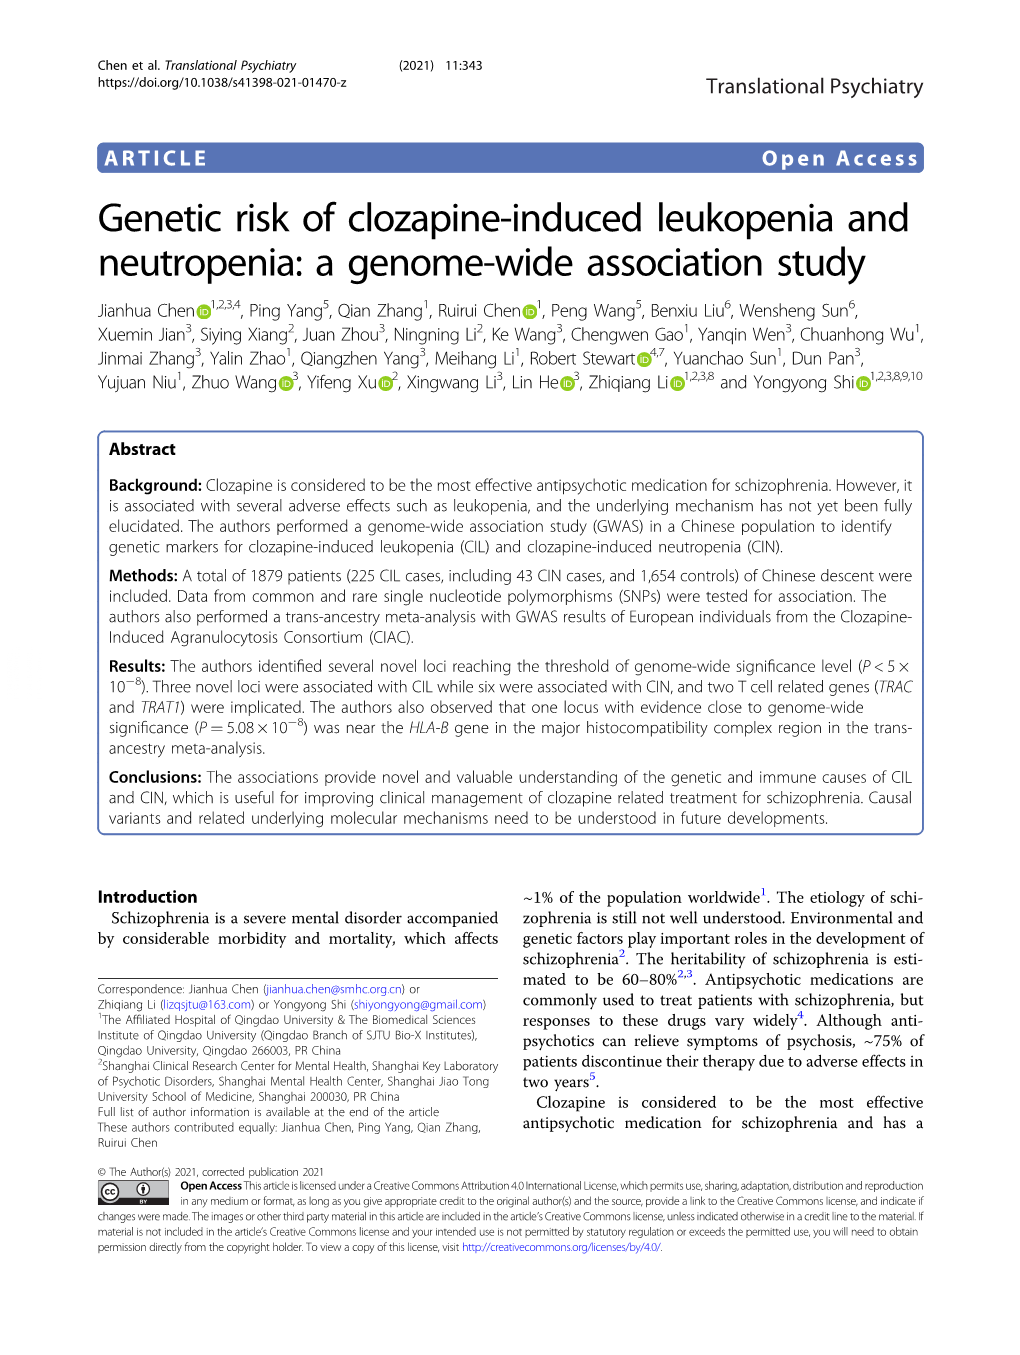 Genetic Risk of Clozapine-Induced Leukopenia and Neutropenia